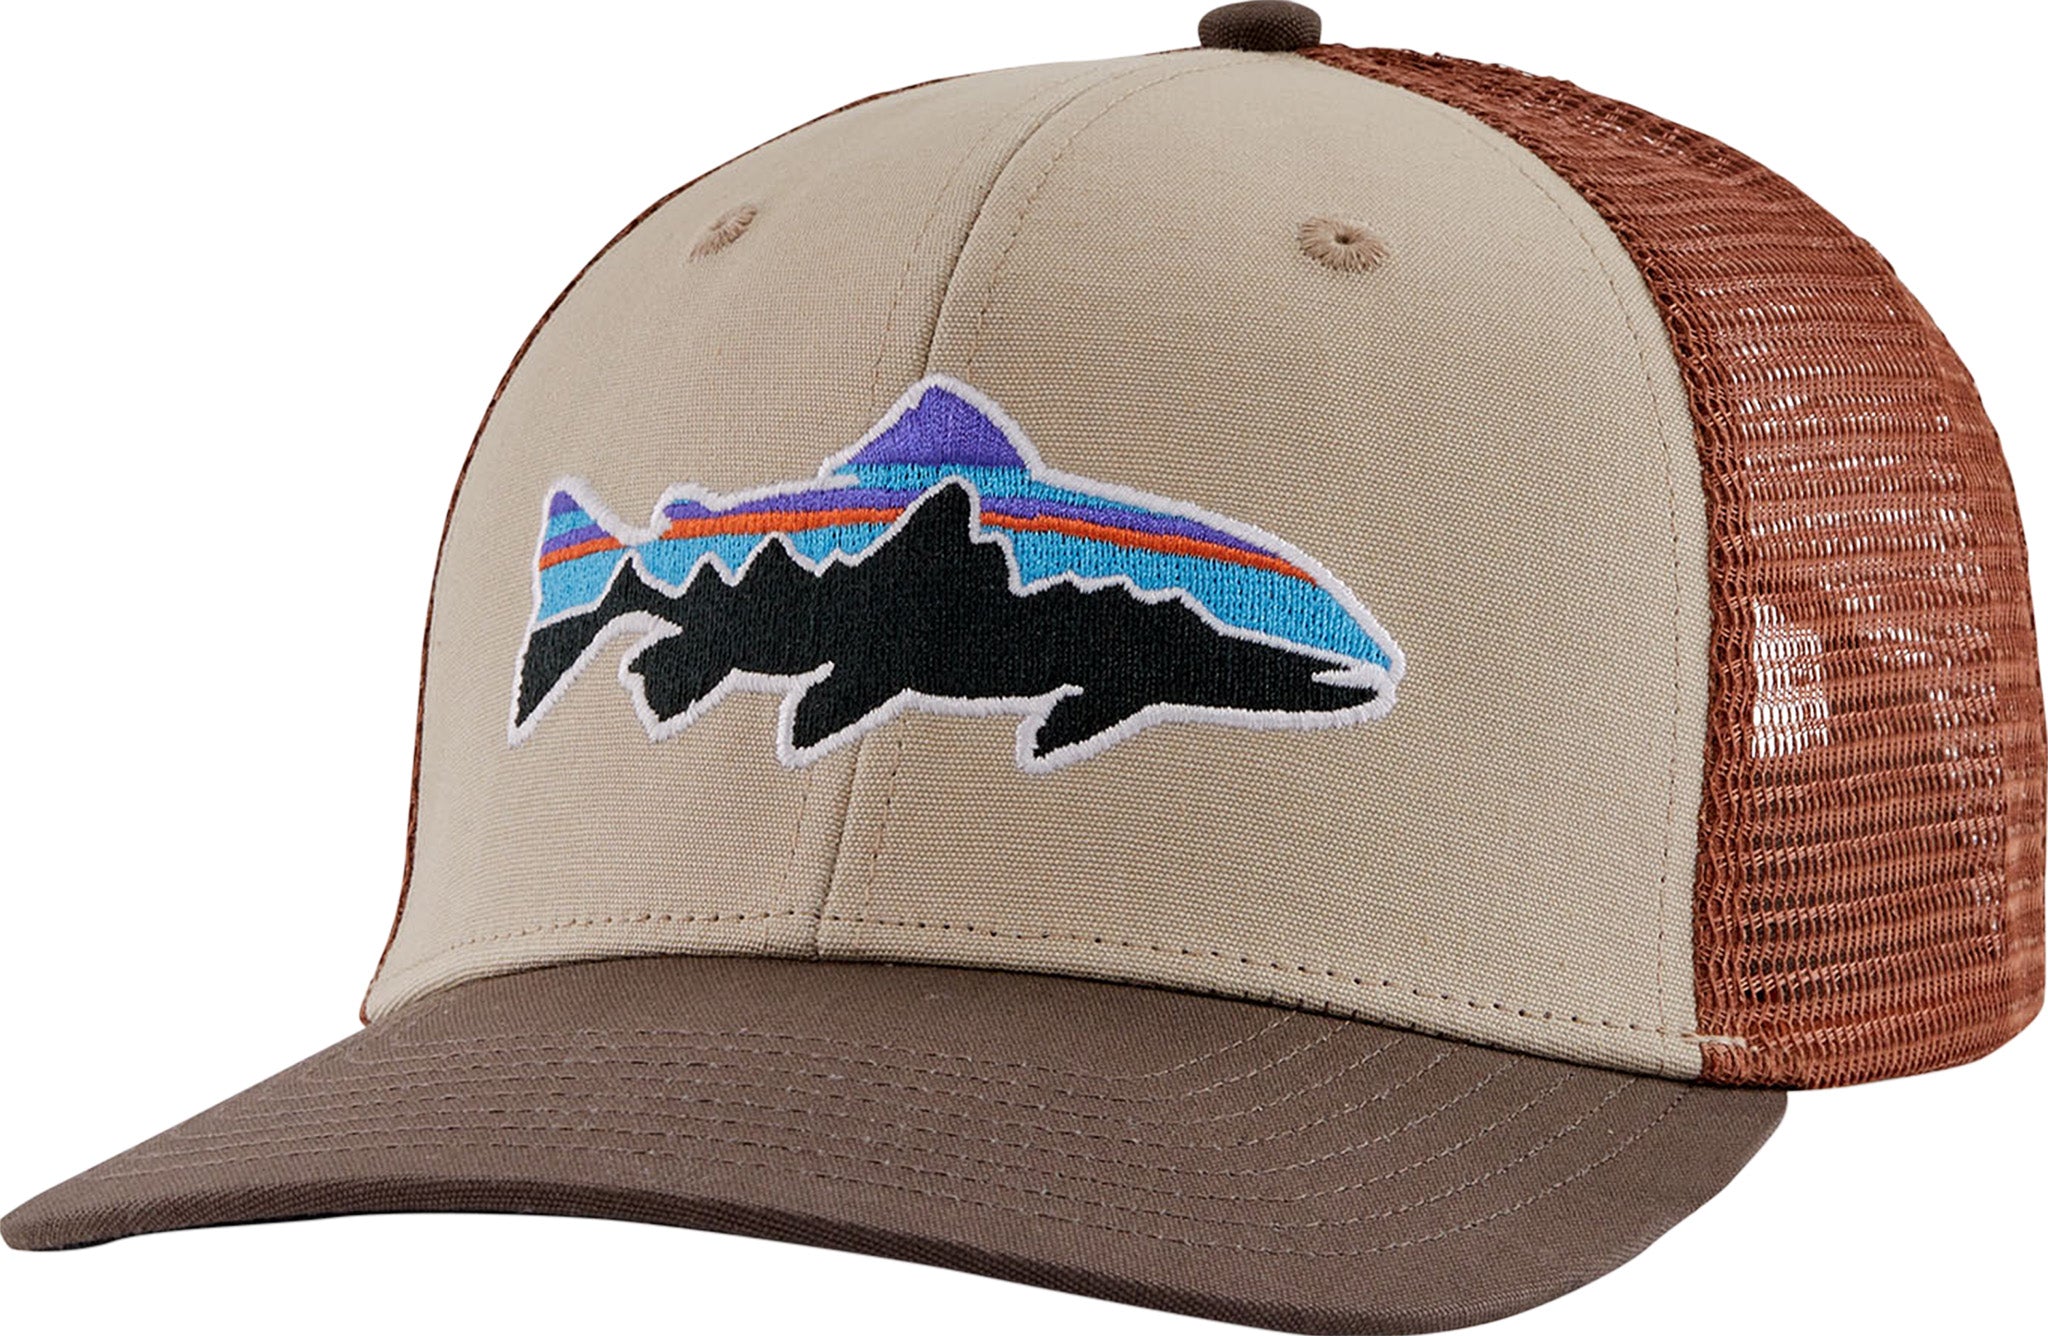 Patagonia Fitz Roy Trout Trucker Hat - Men's